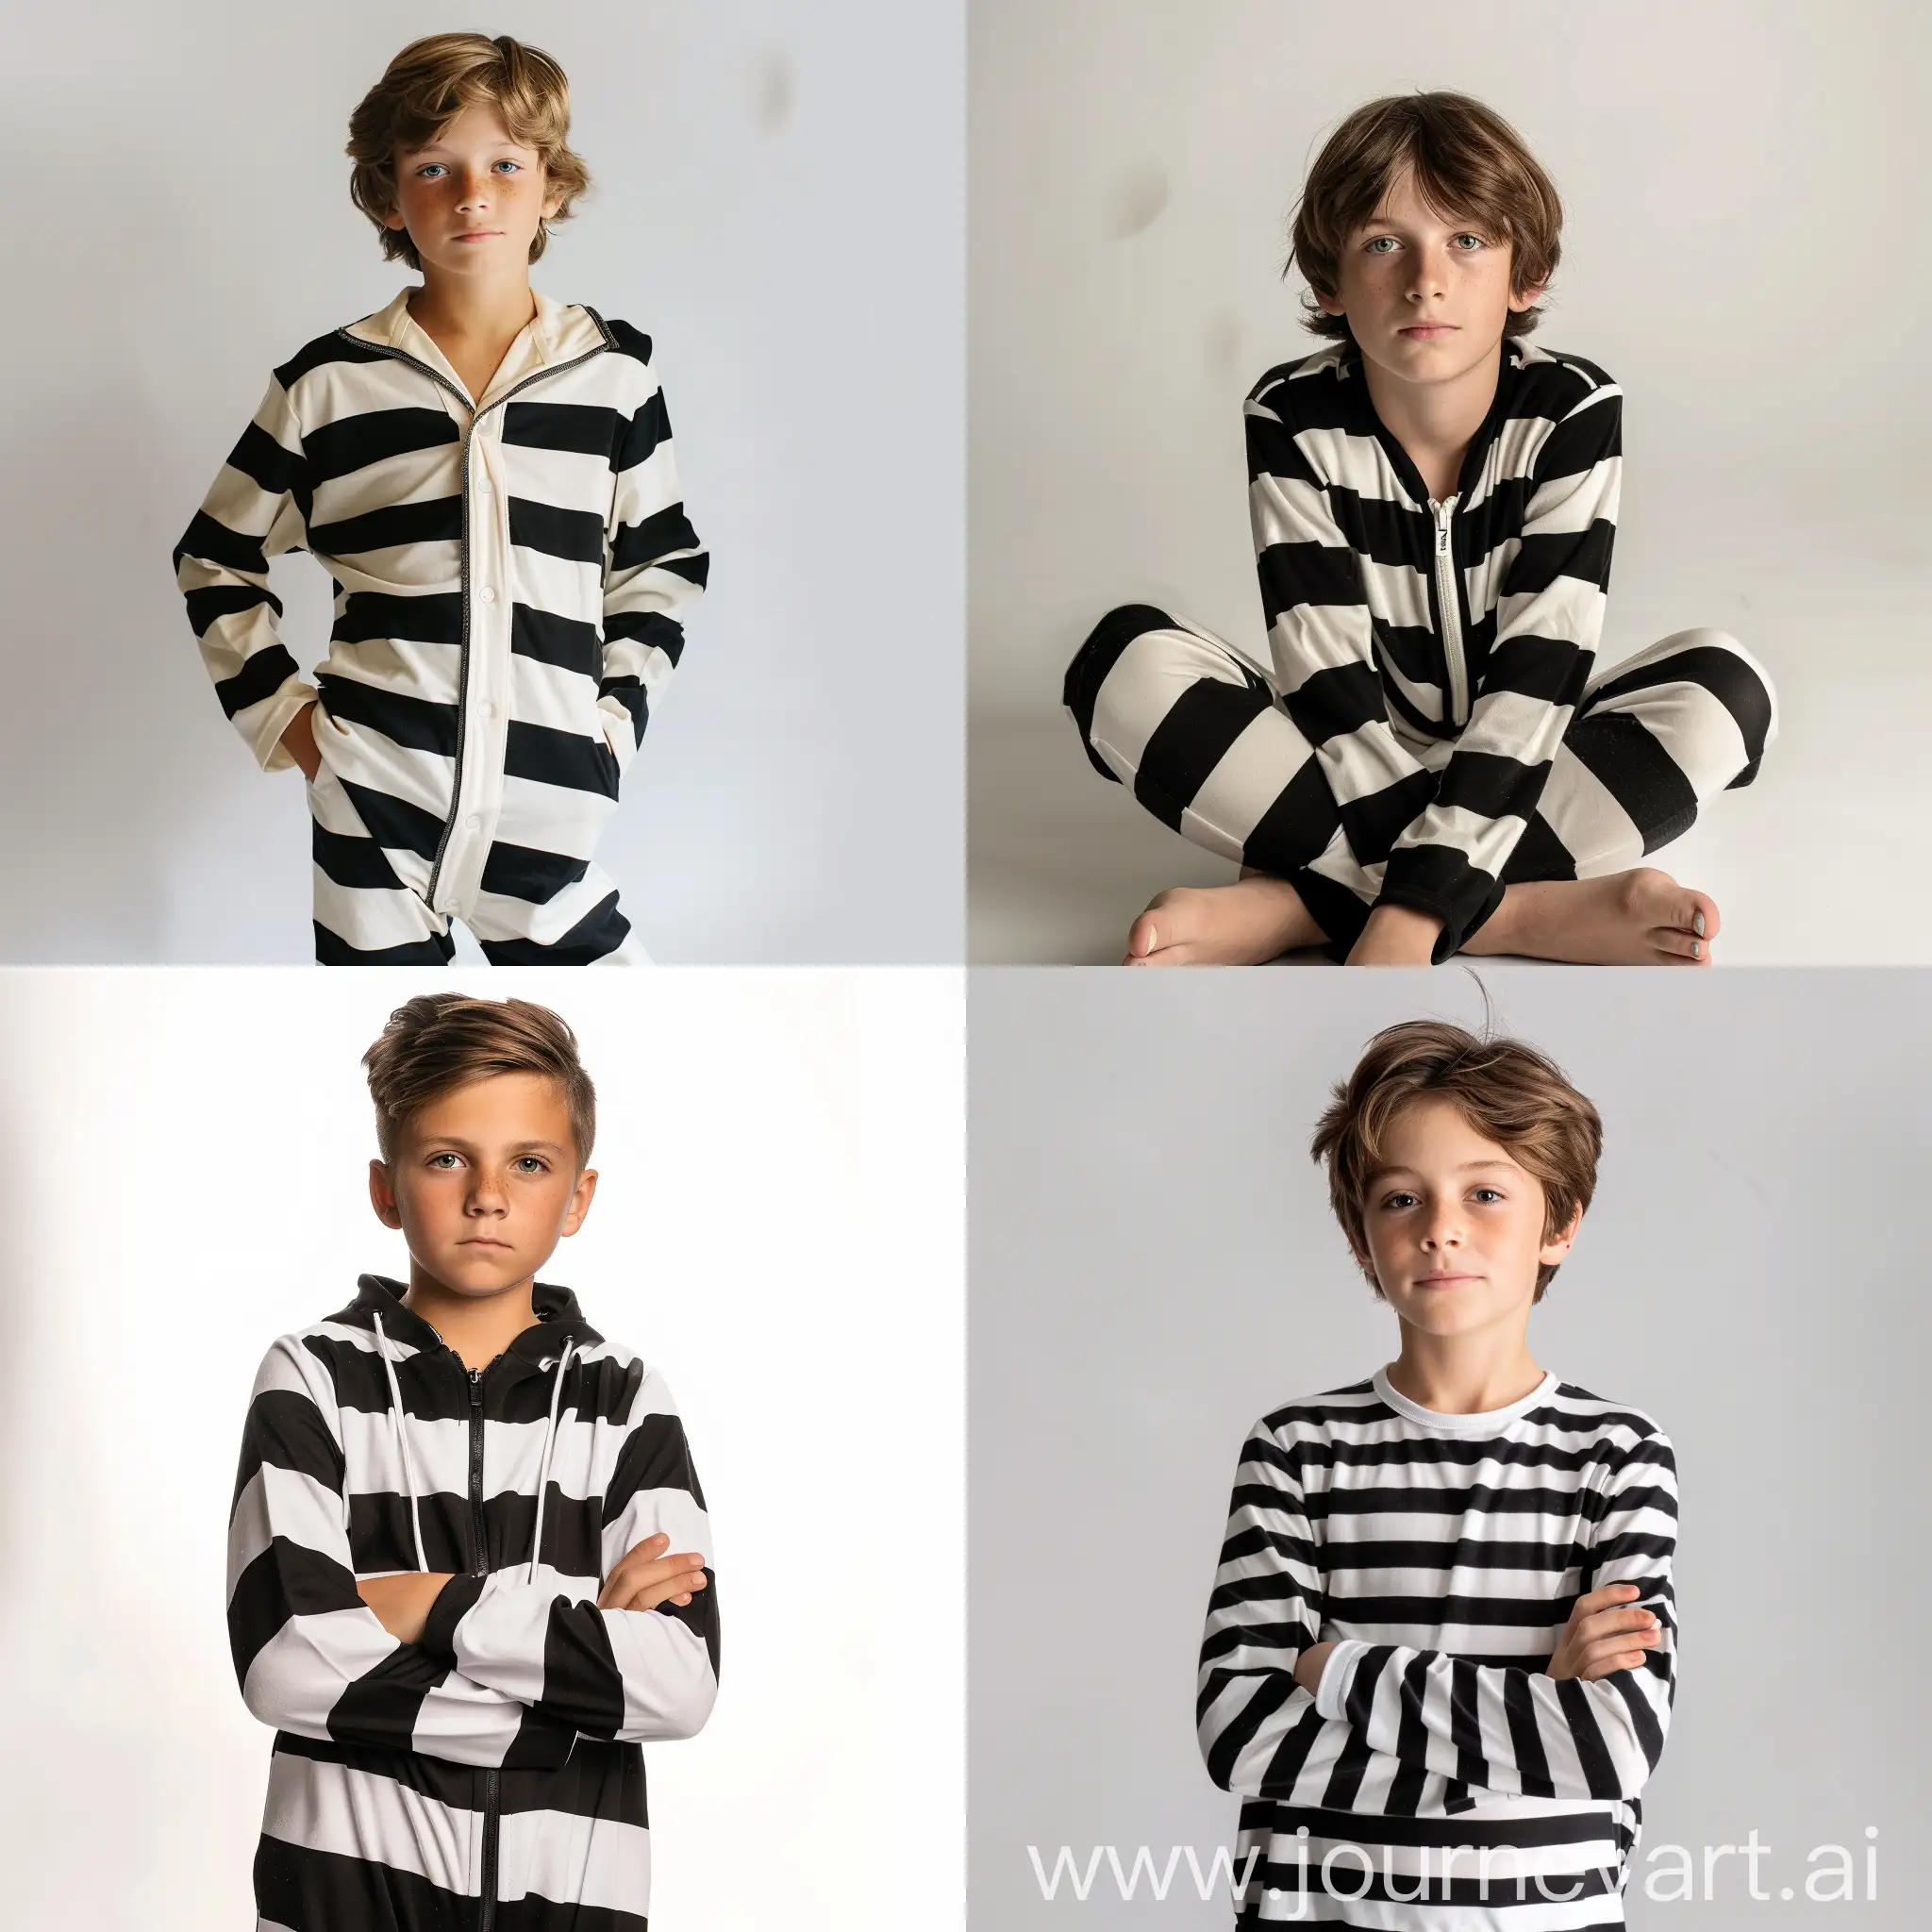 Adolescent-Boy-in-Striped-Onesie-Pajamas